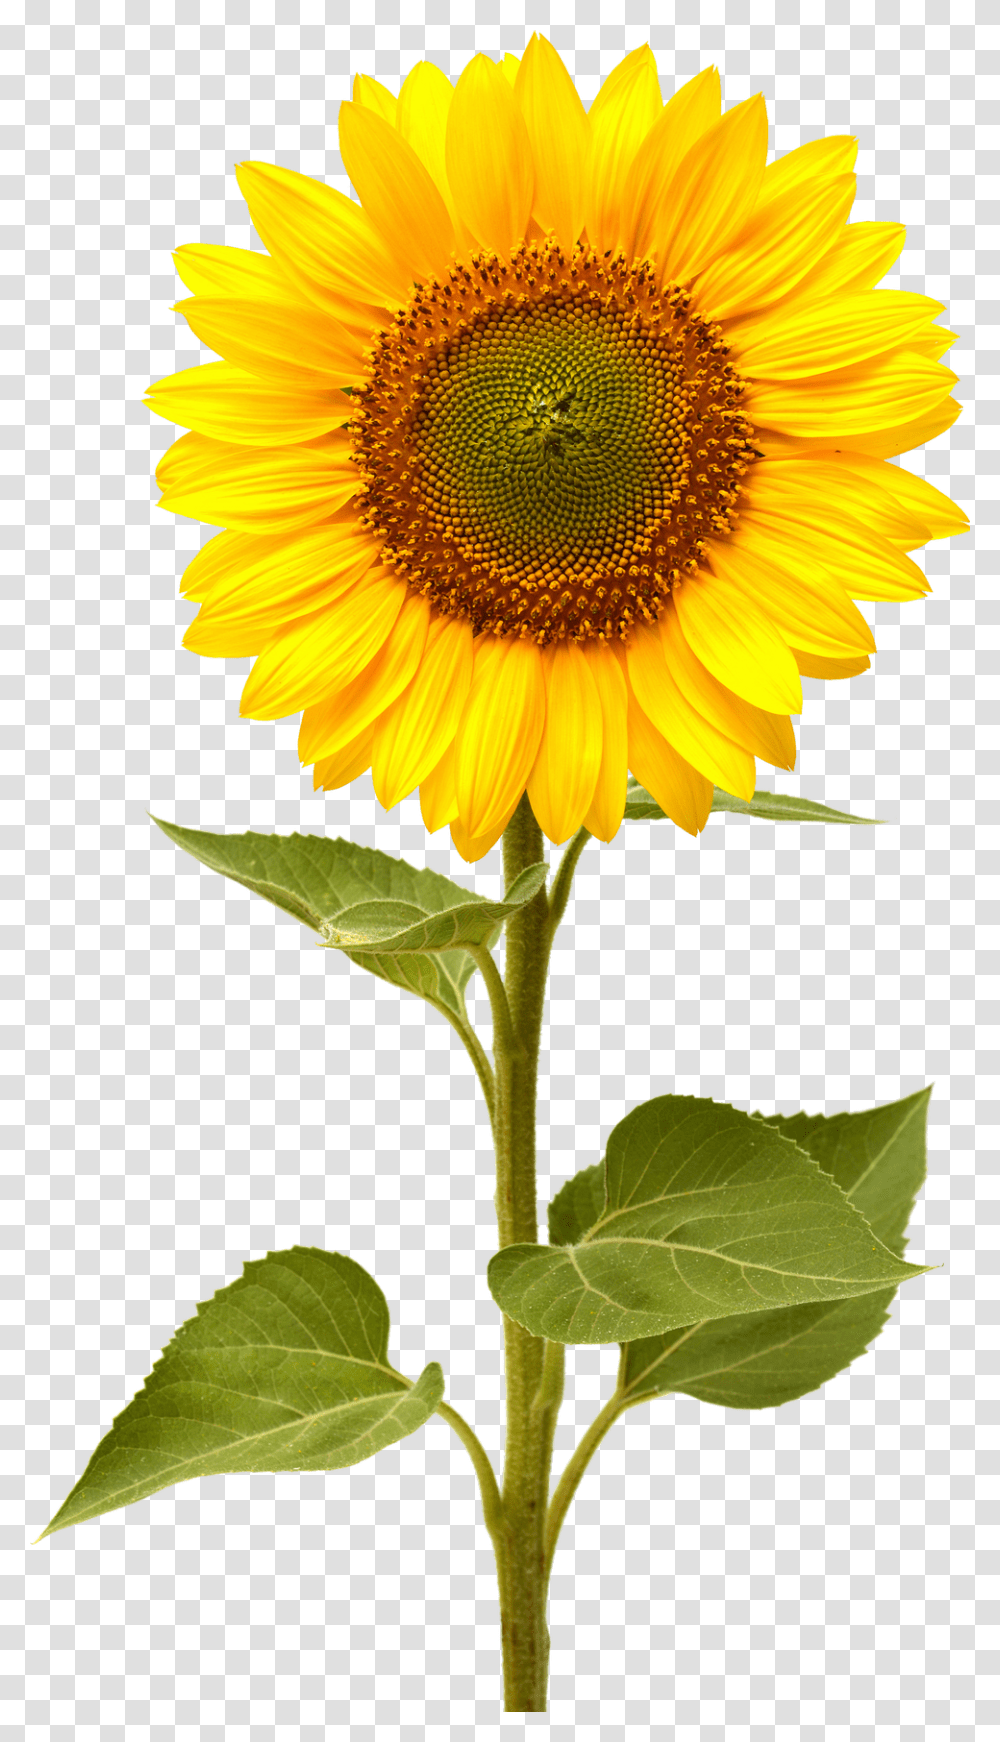 Sunflower Image Purepng Free Cc0 Sunflower, Plant, Blossom, Petal Transparent Png